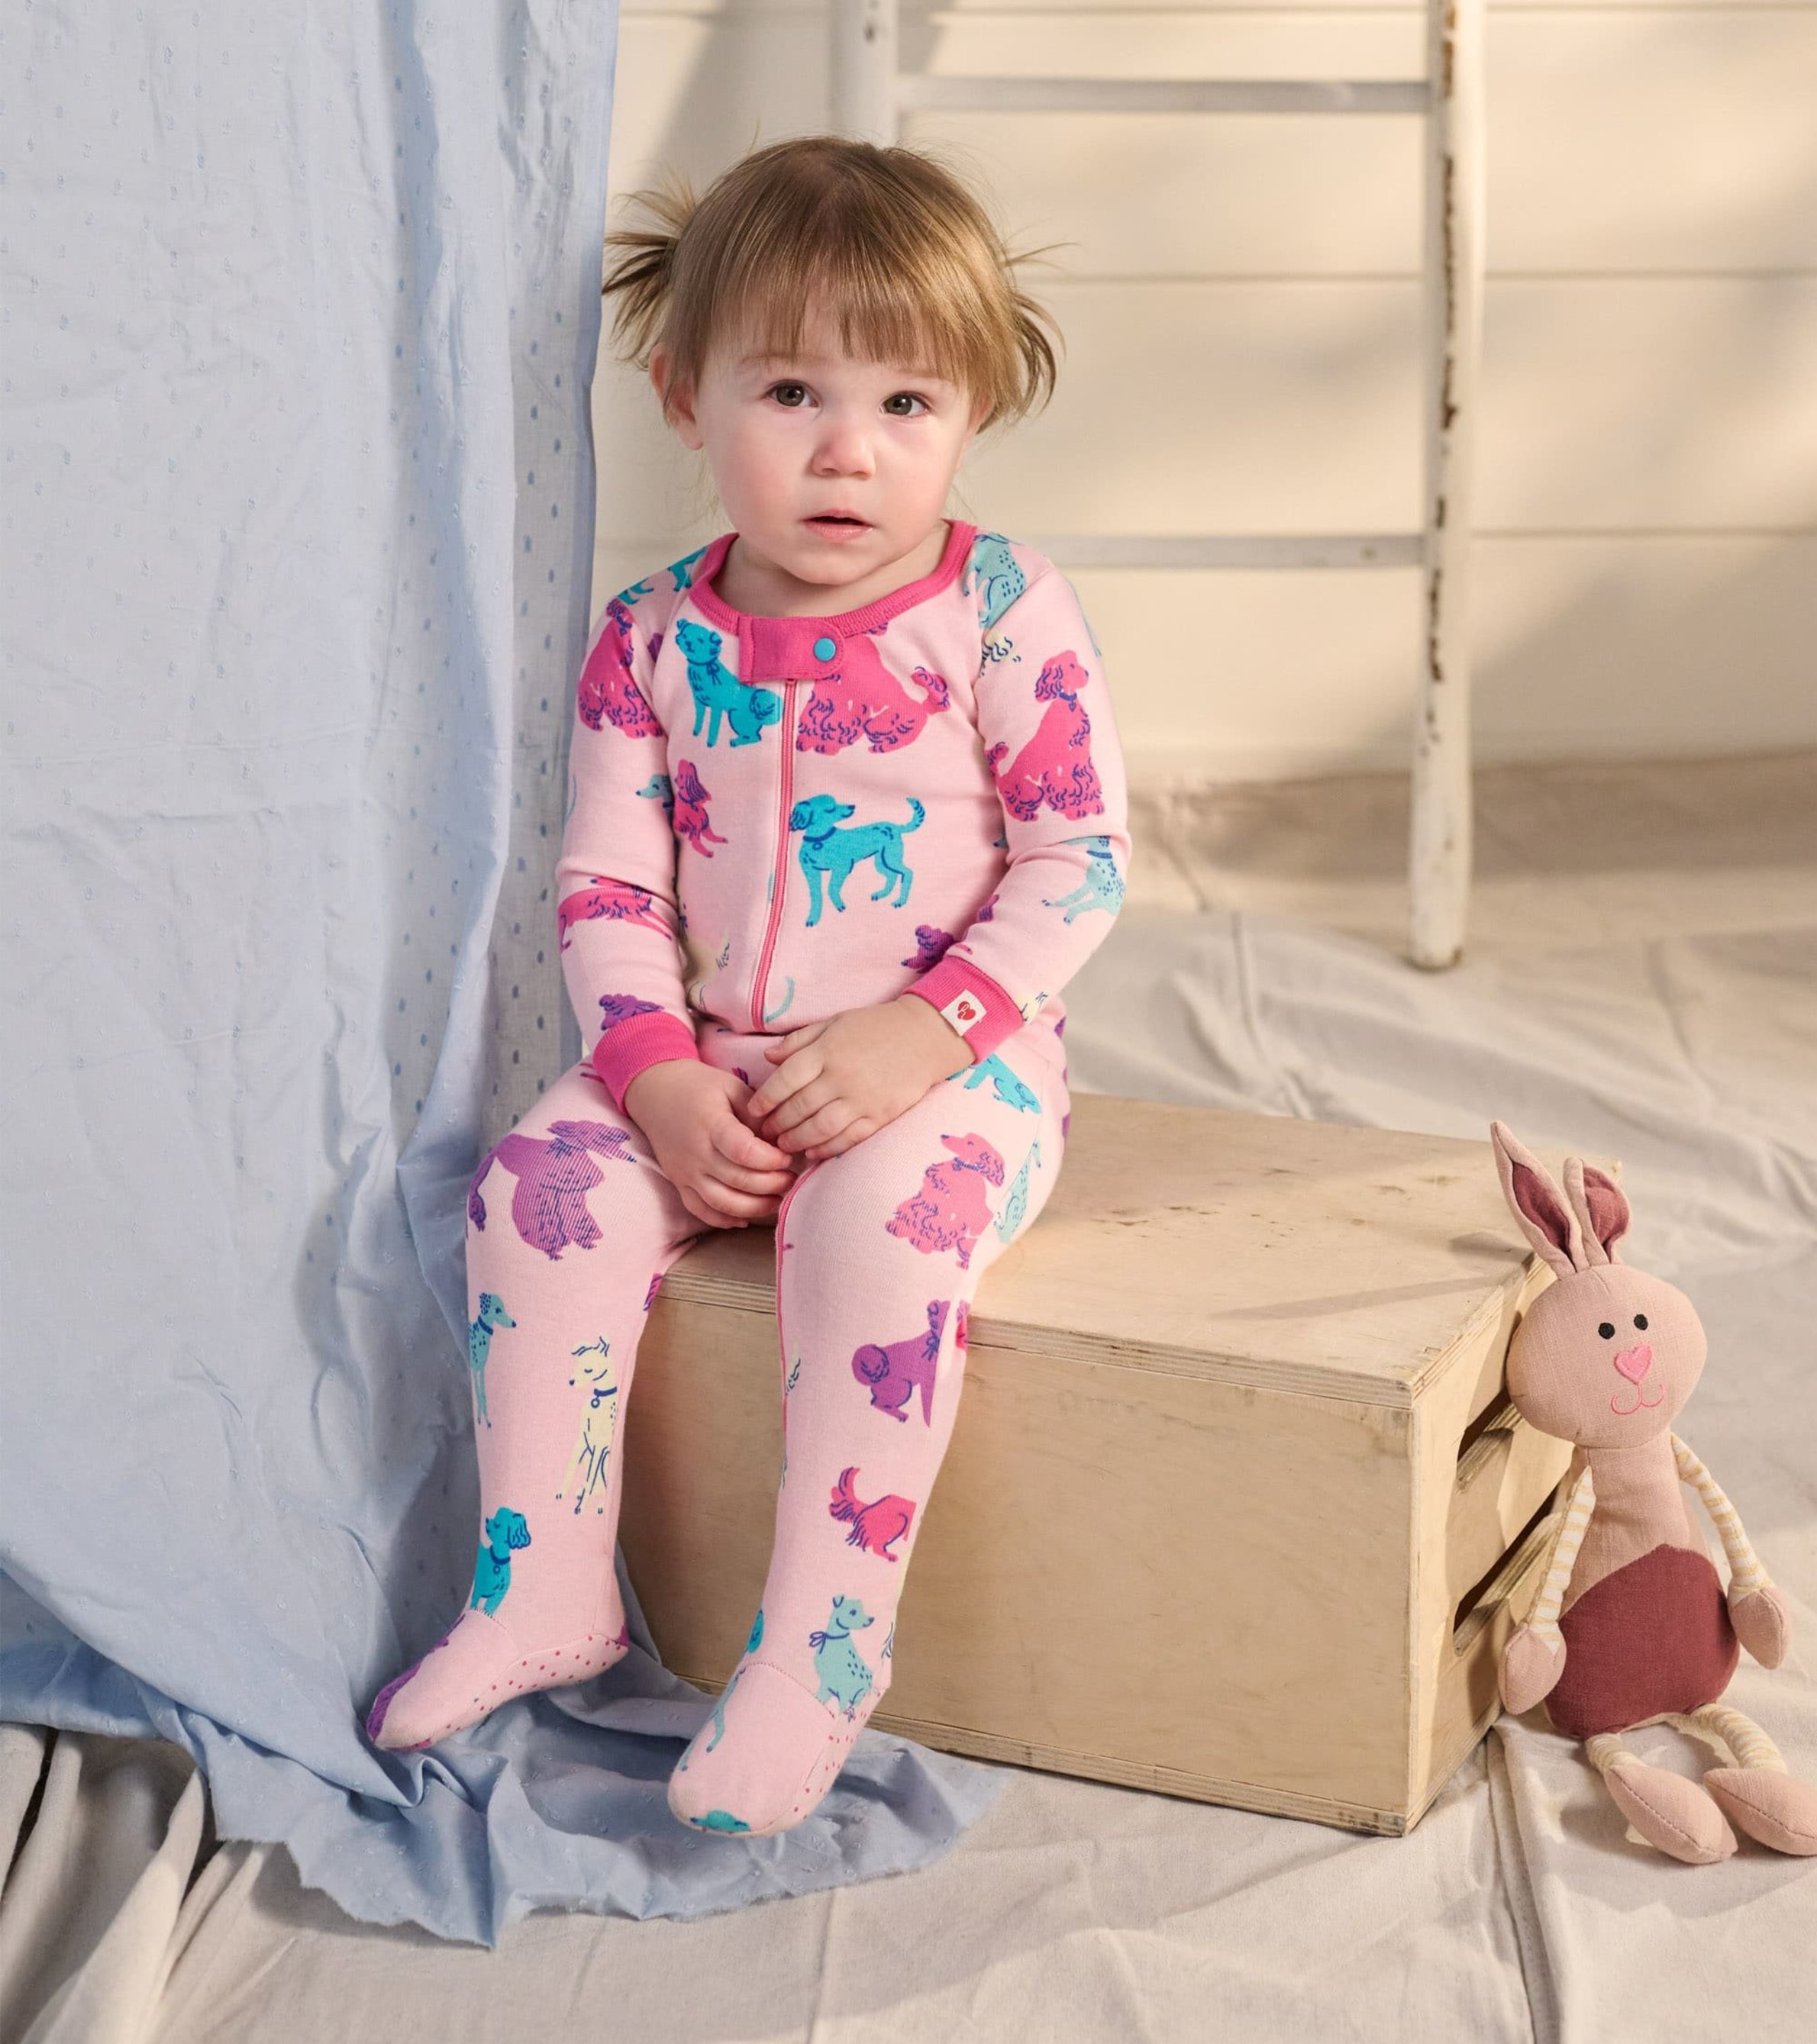 Pretty Forest Organic Cotton Baby Pajama Set - Hatley CA